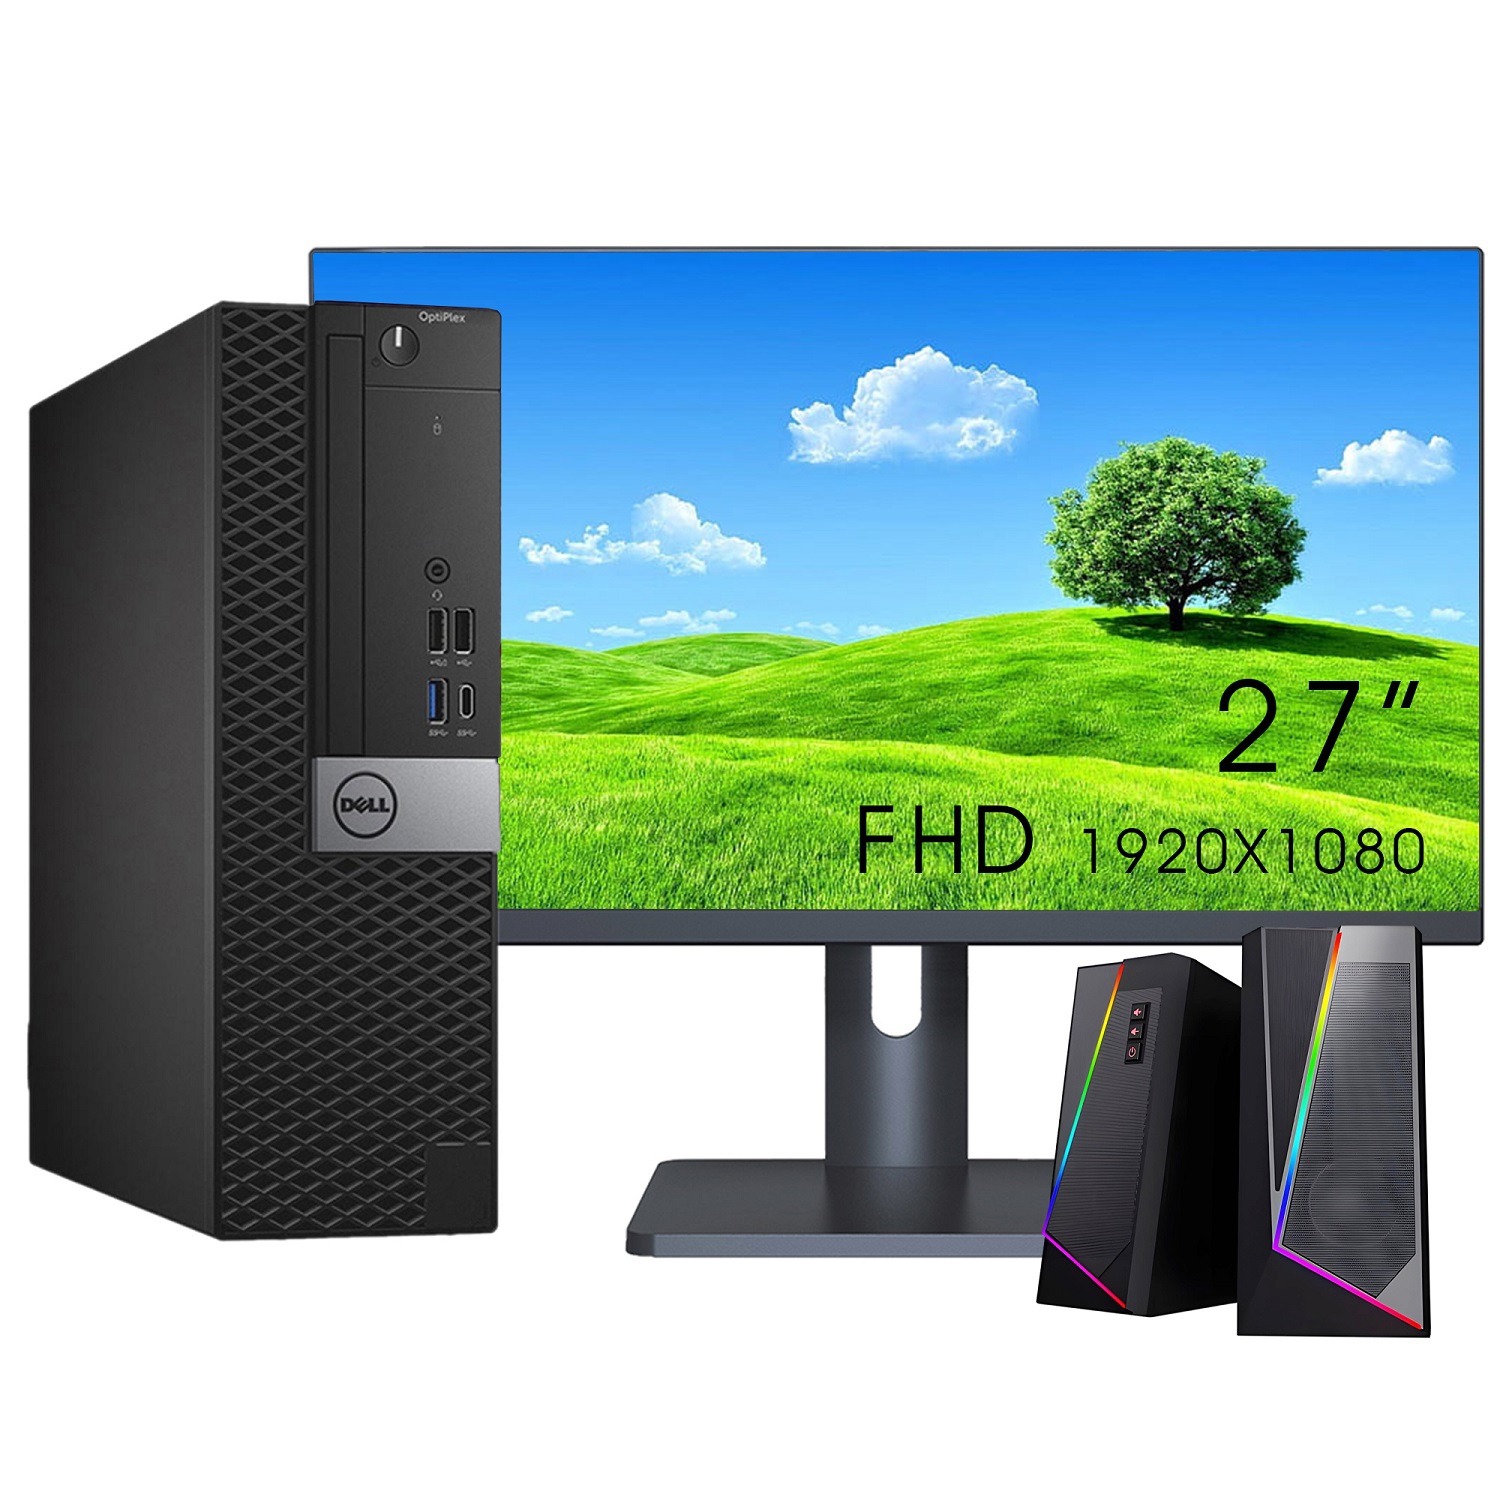 Refurbished (Good) - DELL Optiplex Desktop PC Computer | Intel Core i7 6th Gen Processor (upto 4.00 GHz) | 32 GB DDR4 RAM New 2TB SSD | New 27" FHD Monitor | Win 10 Pro,WiFi,HDMI